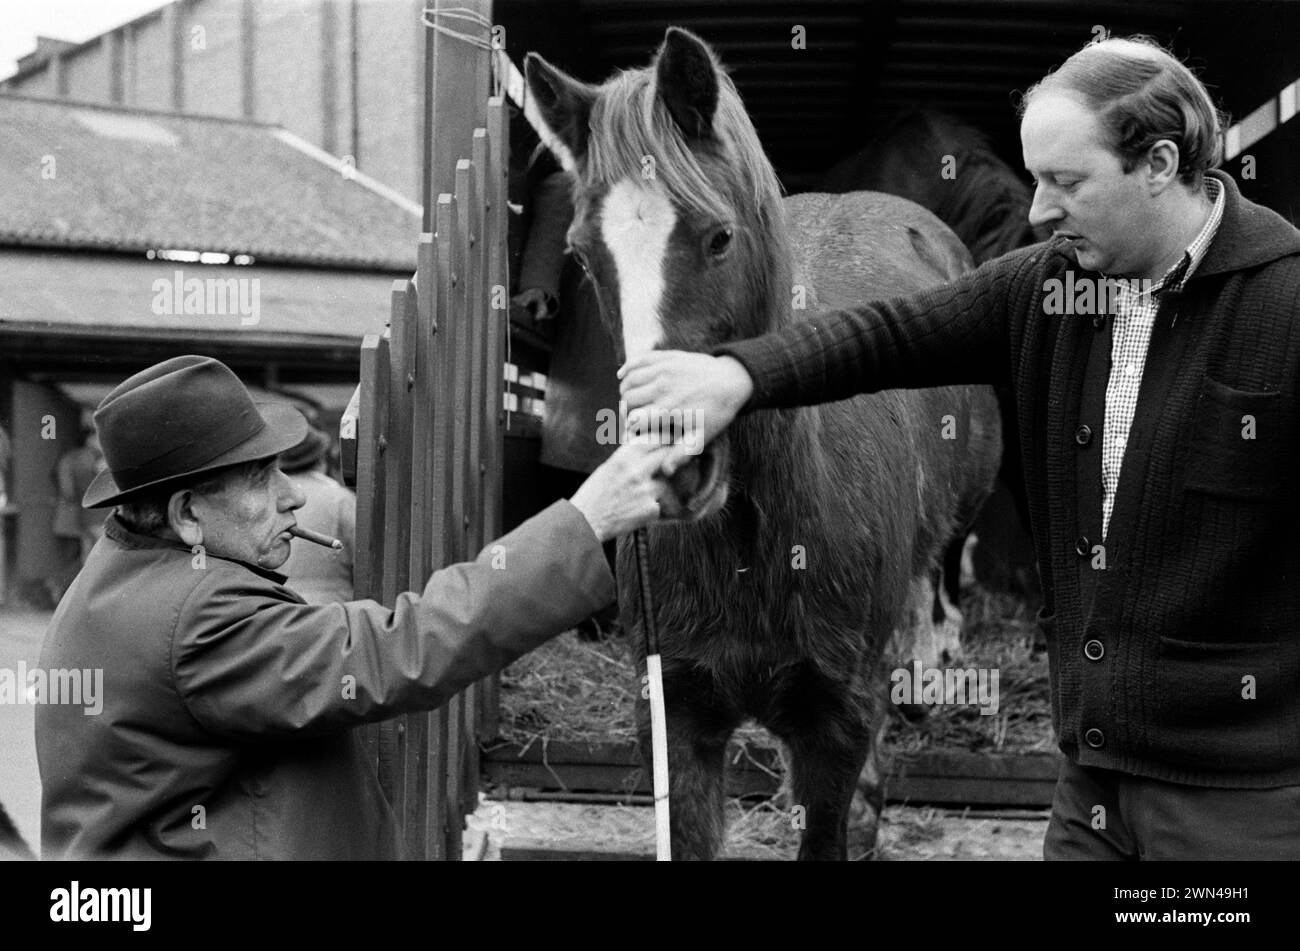 1980s London Uk Southall weekly Wednesday horse market, Charter Fair. Steven Bell (Right) horse dealer in Southall. Southall, Ealing, West London, England 1983. HOMER SYKES Stock Photo